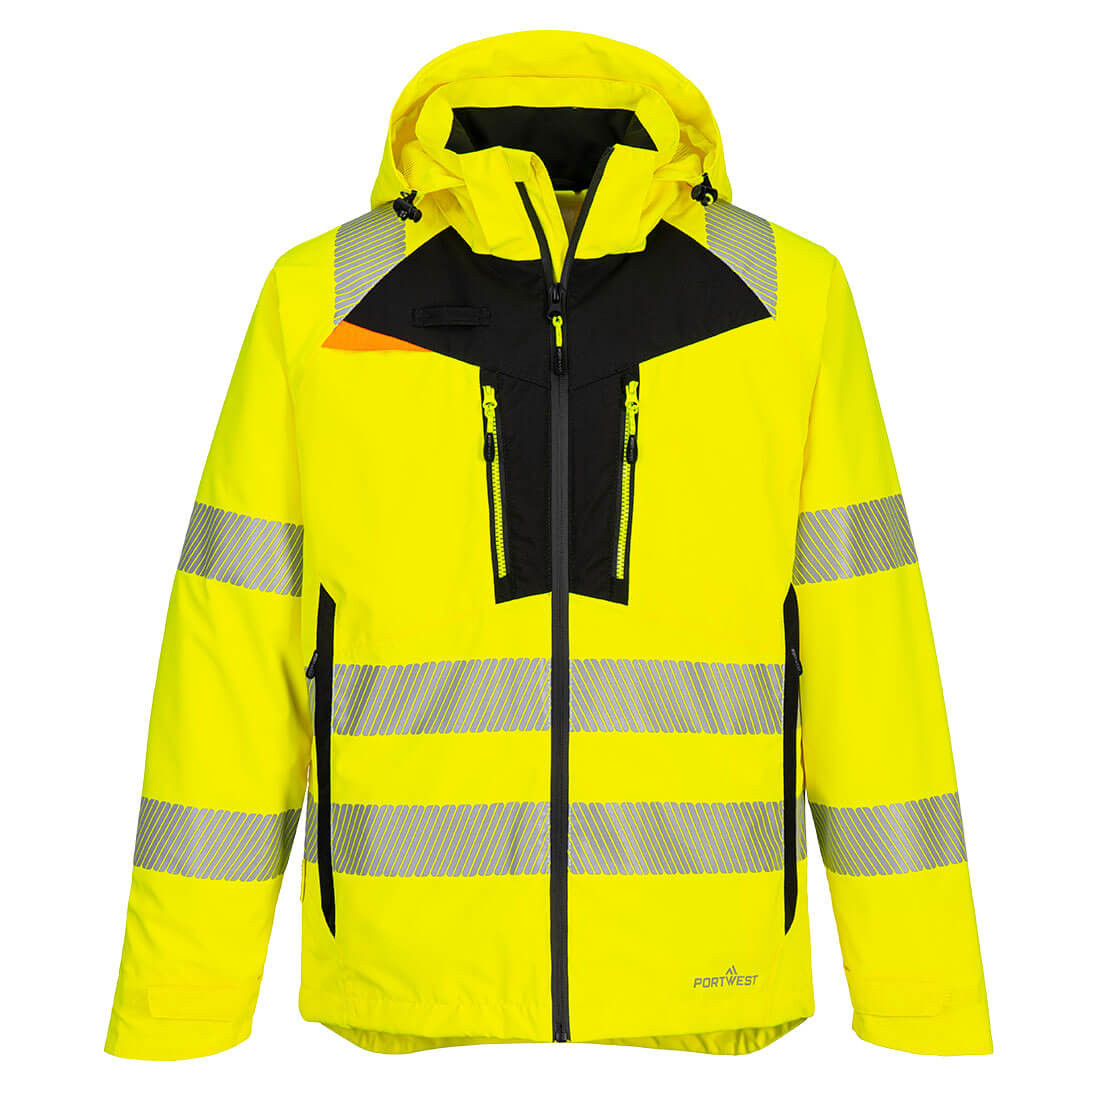 DX4 Hi-Vis Rain Jacket - Safetywear